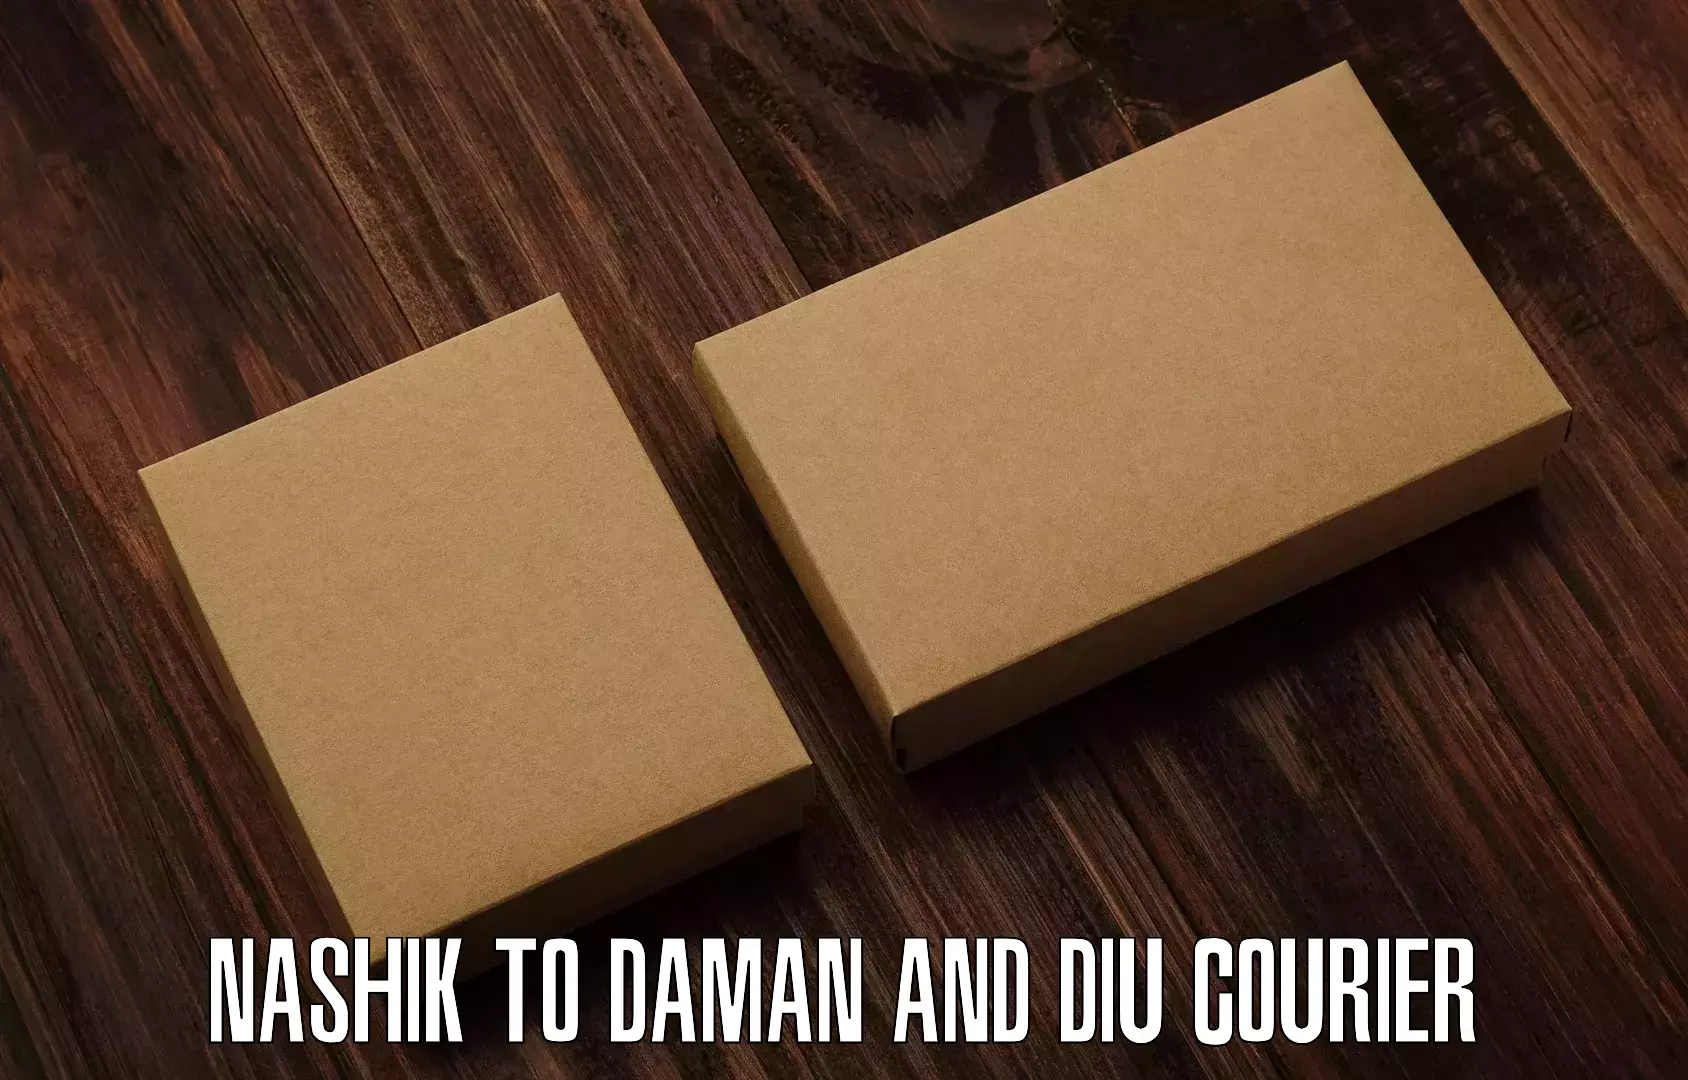 Courier service comparison Nashik to Daman and Diu